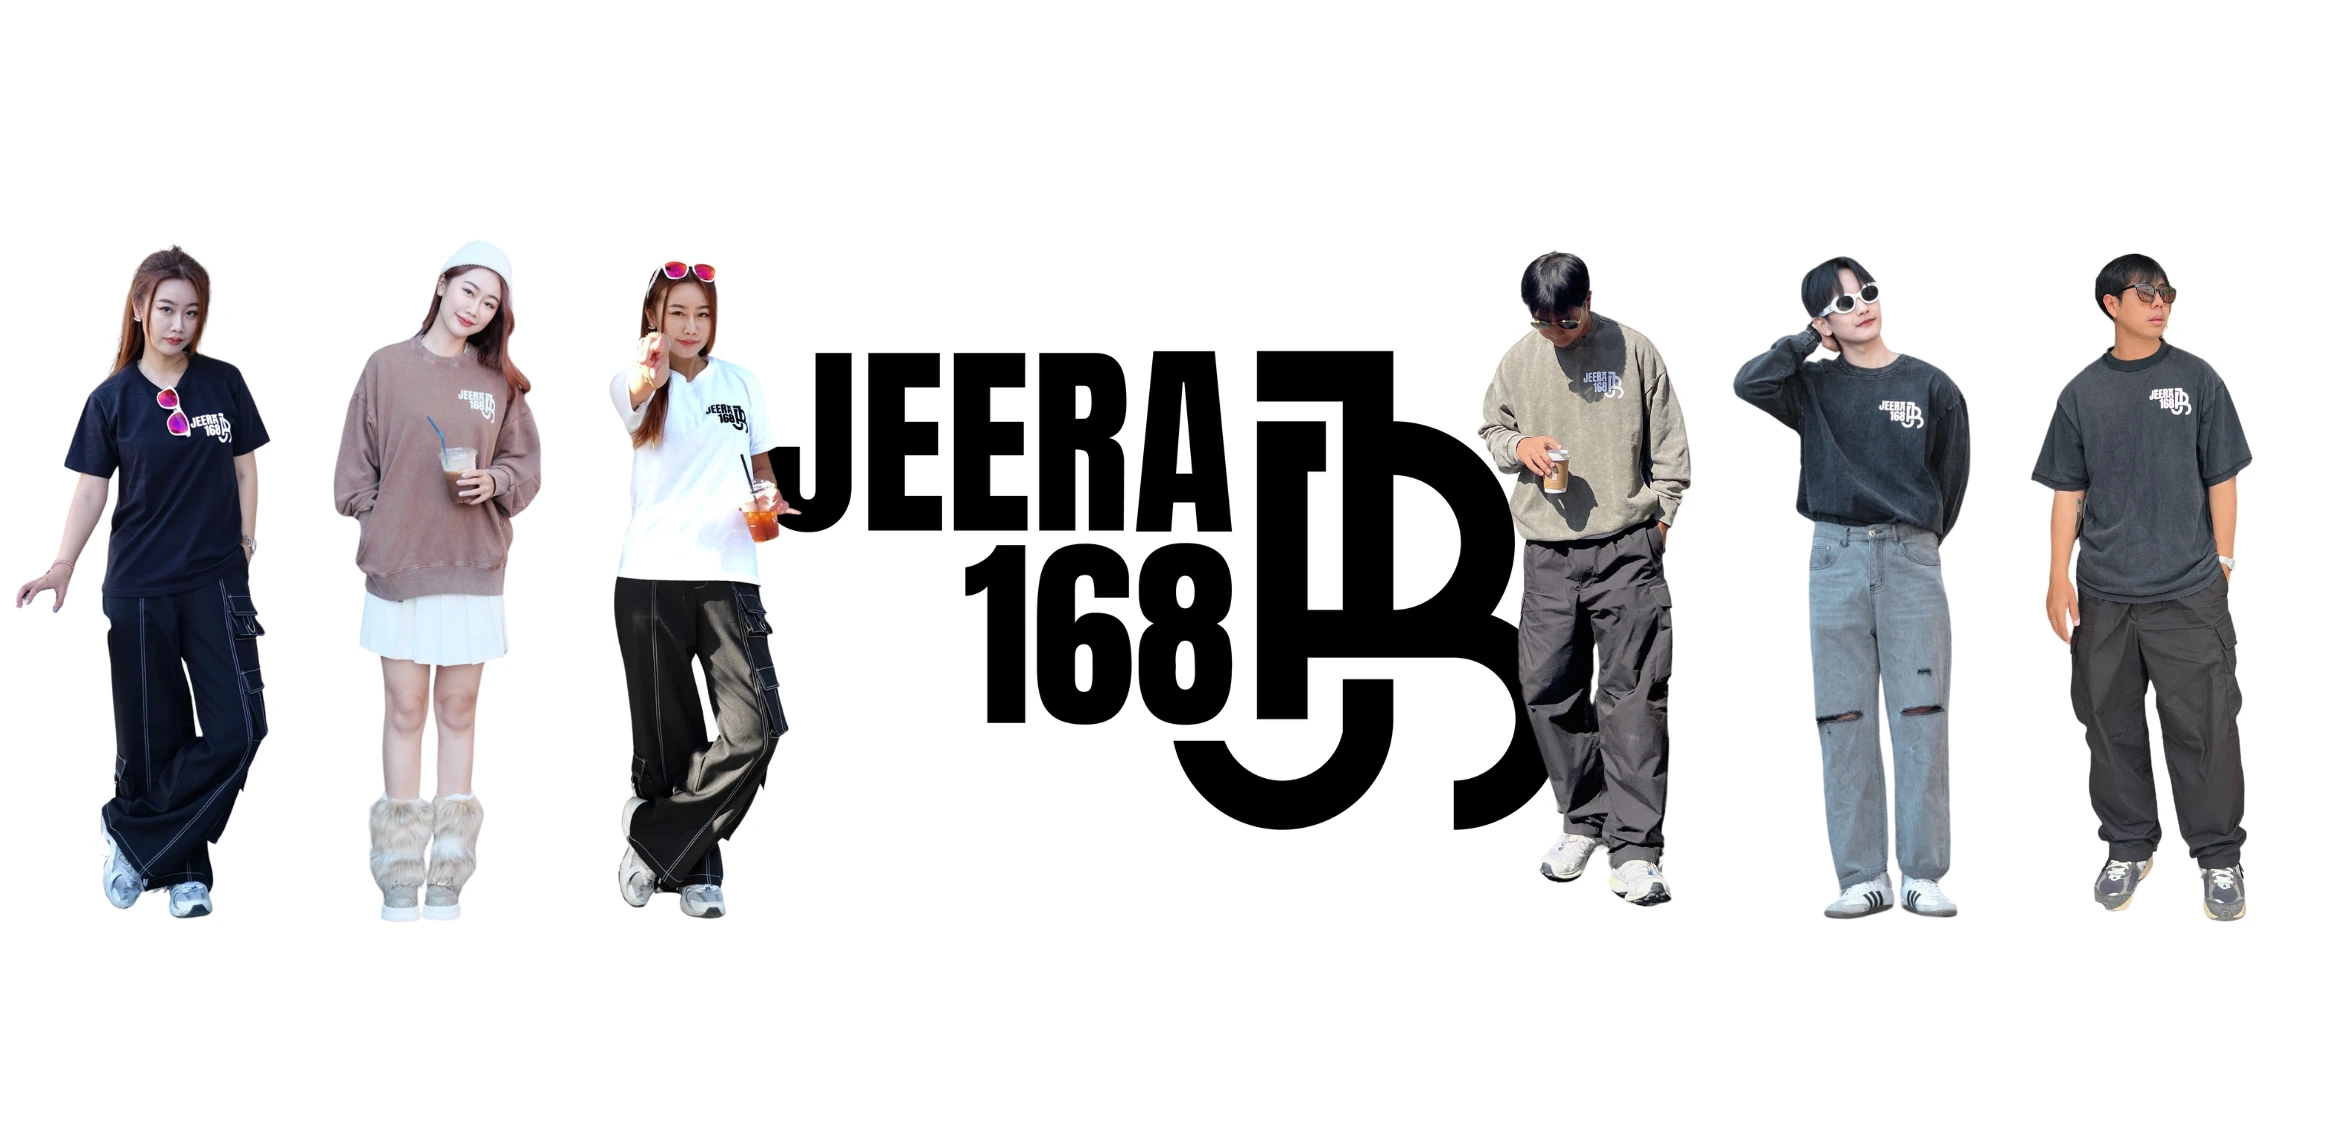 Jeera 168